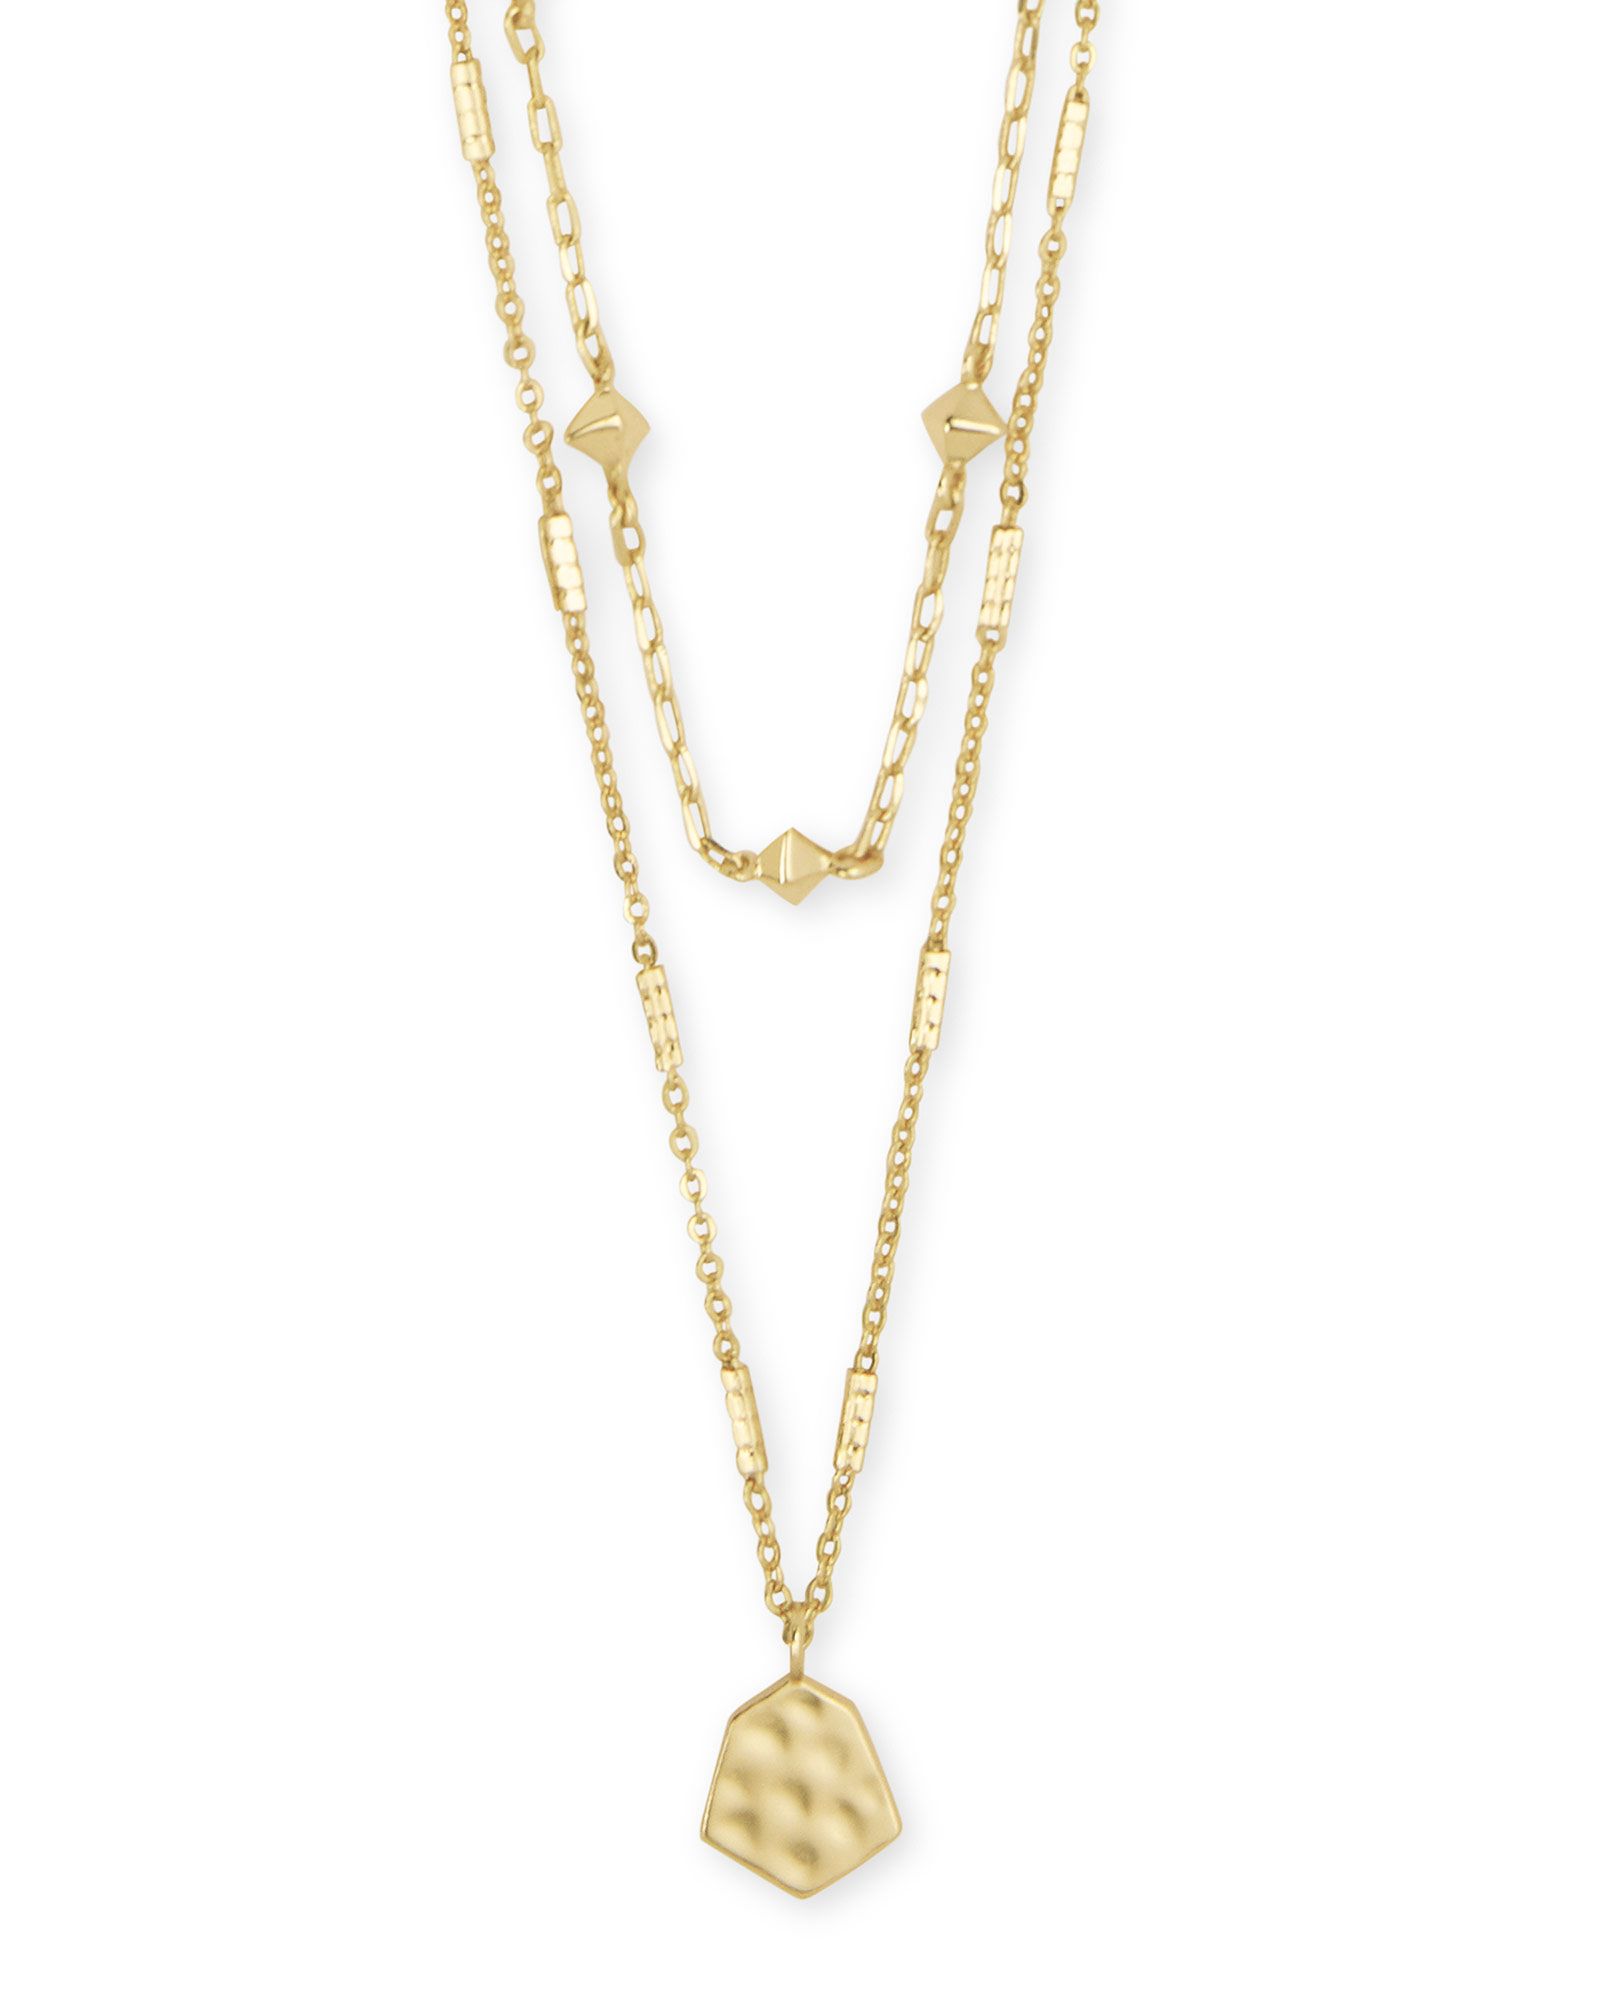 Clove Multi Strand Necklace in Gold | Kendra Scott